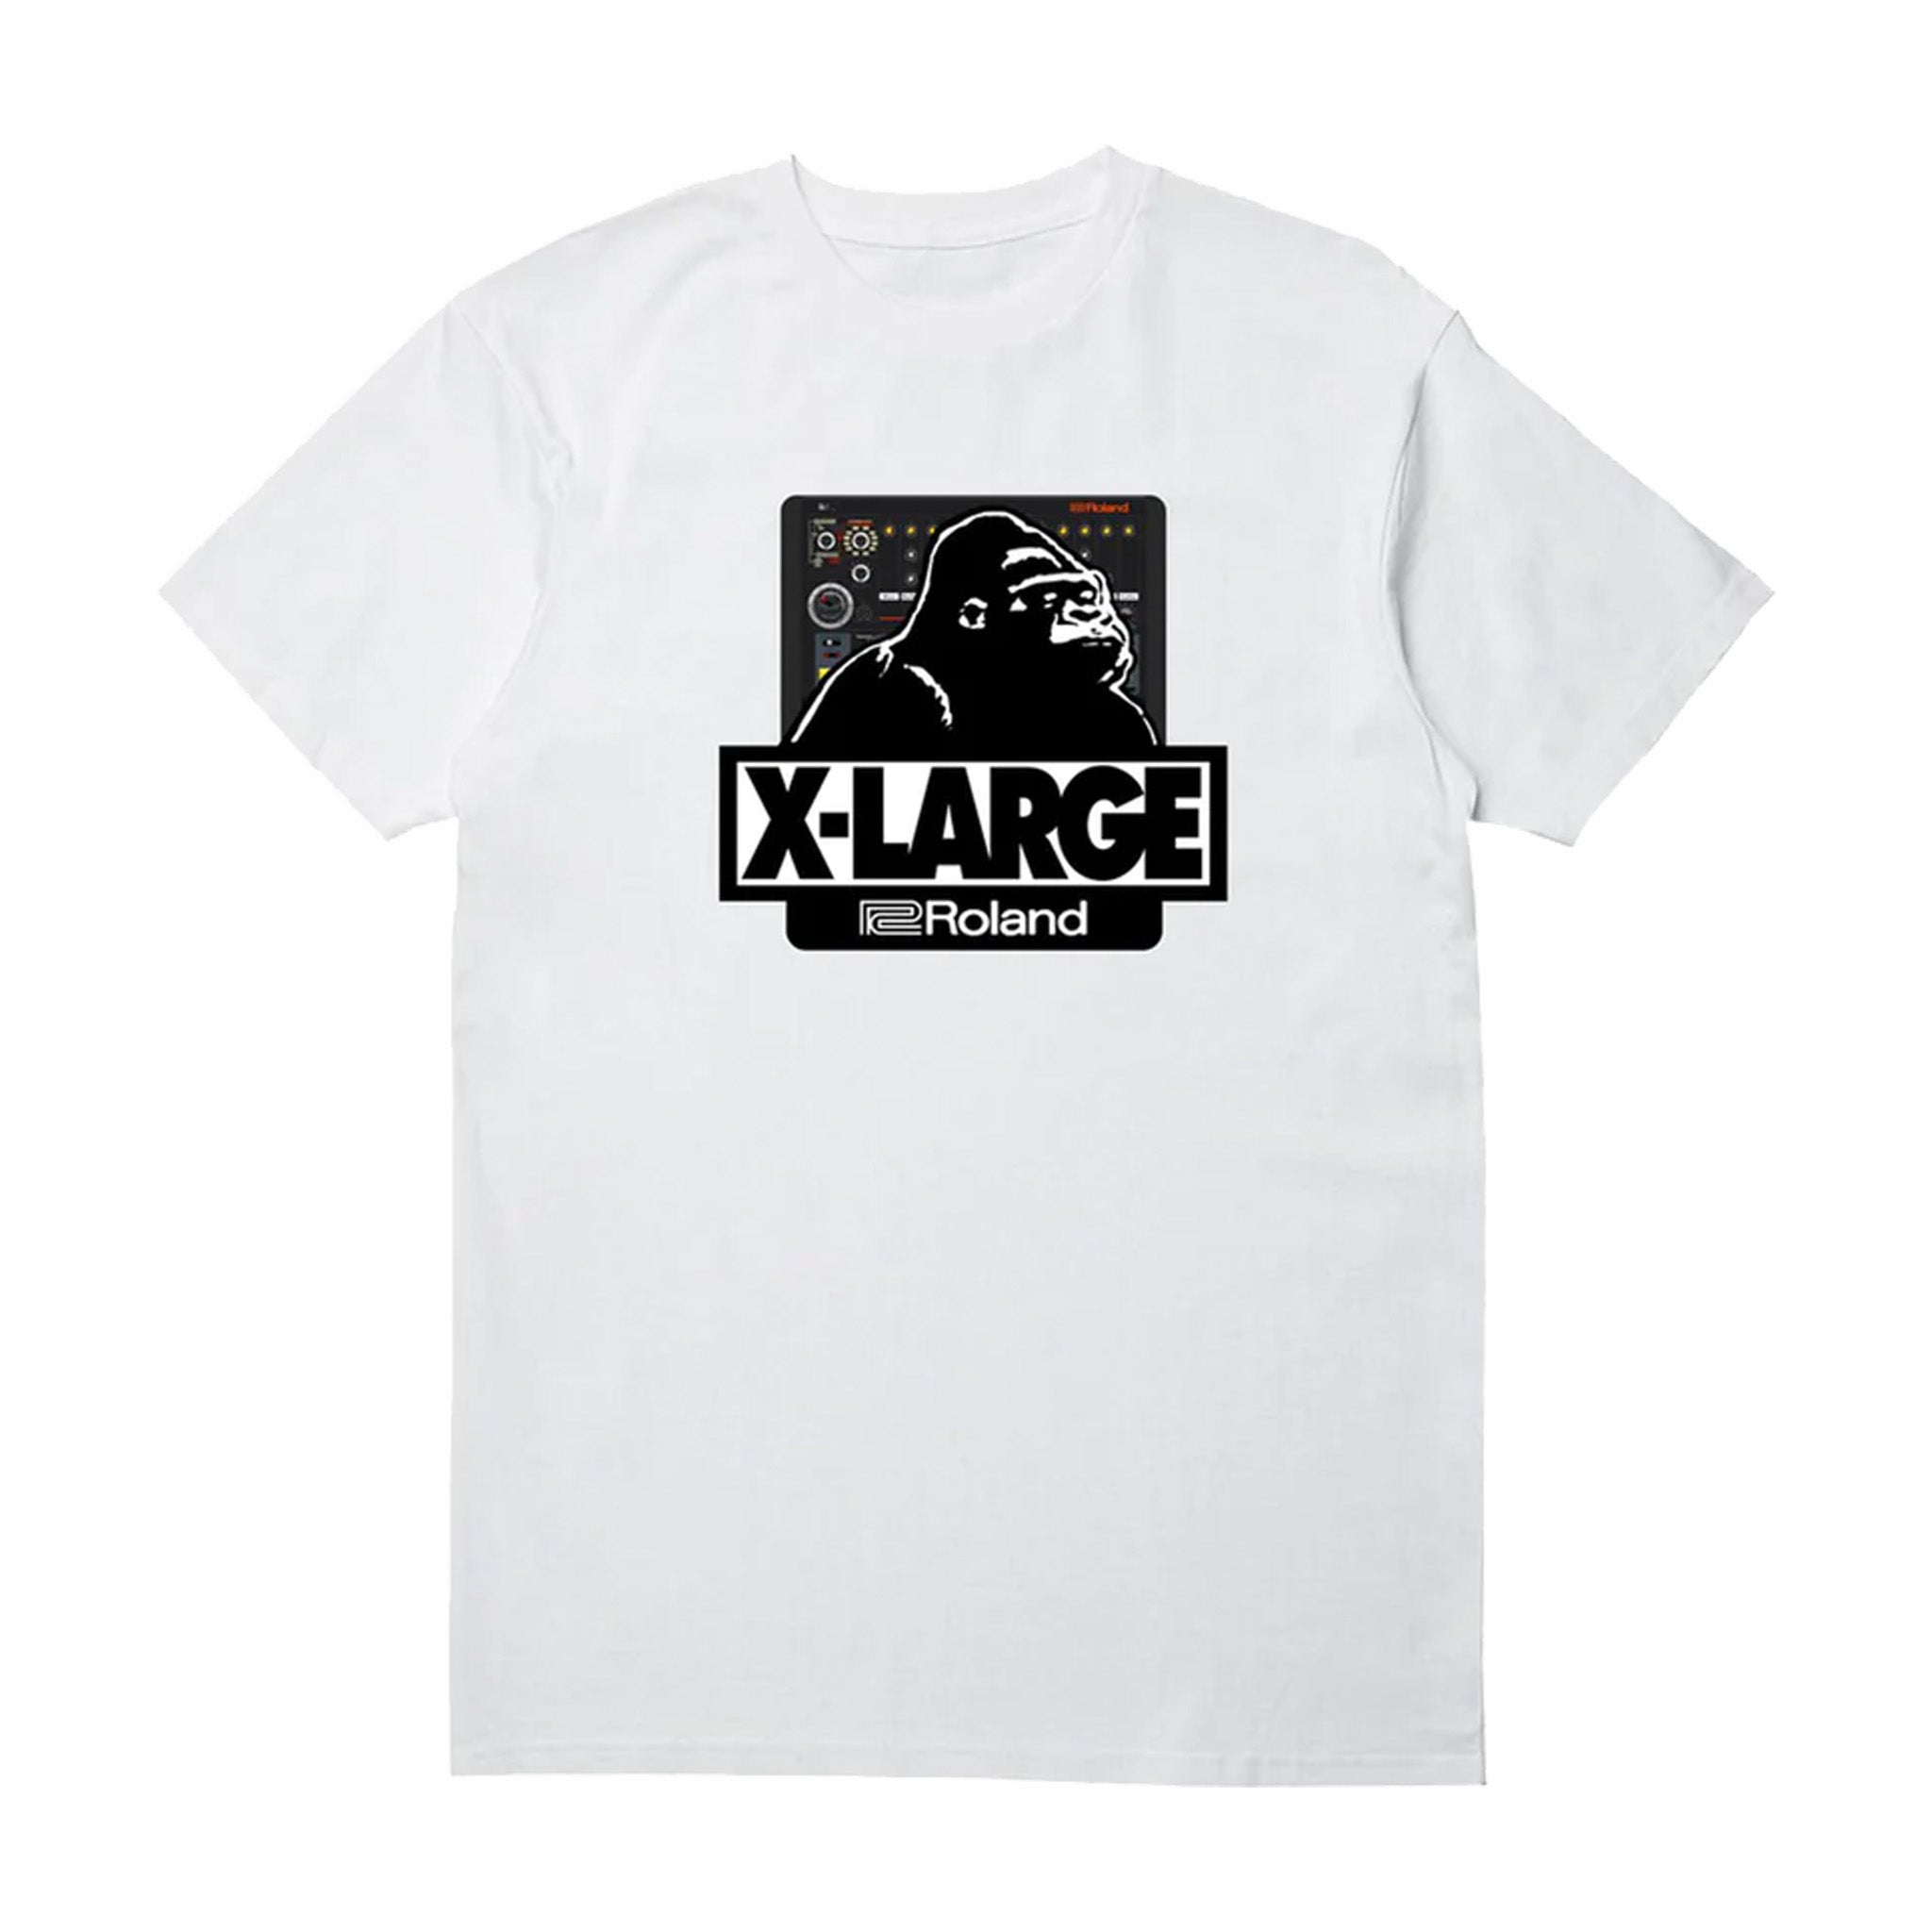 Roland Lifestyle XLARGE Roland T-Shirt (White) - August Shop